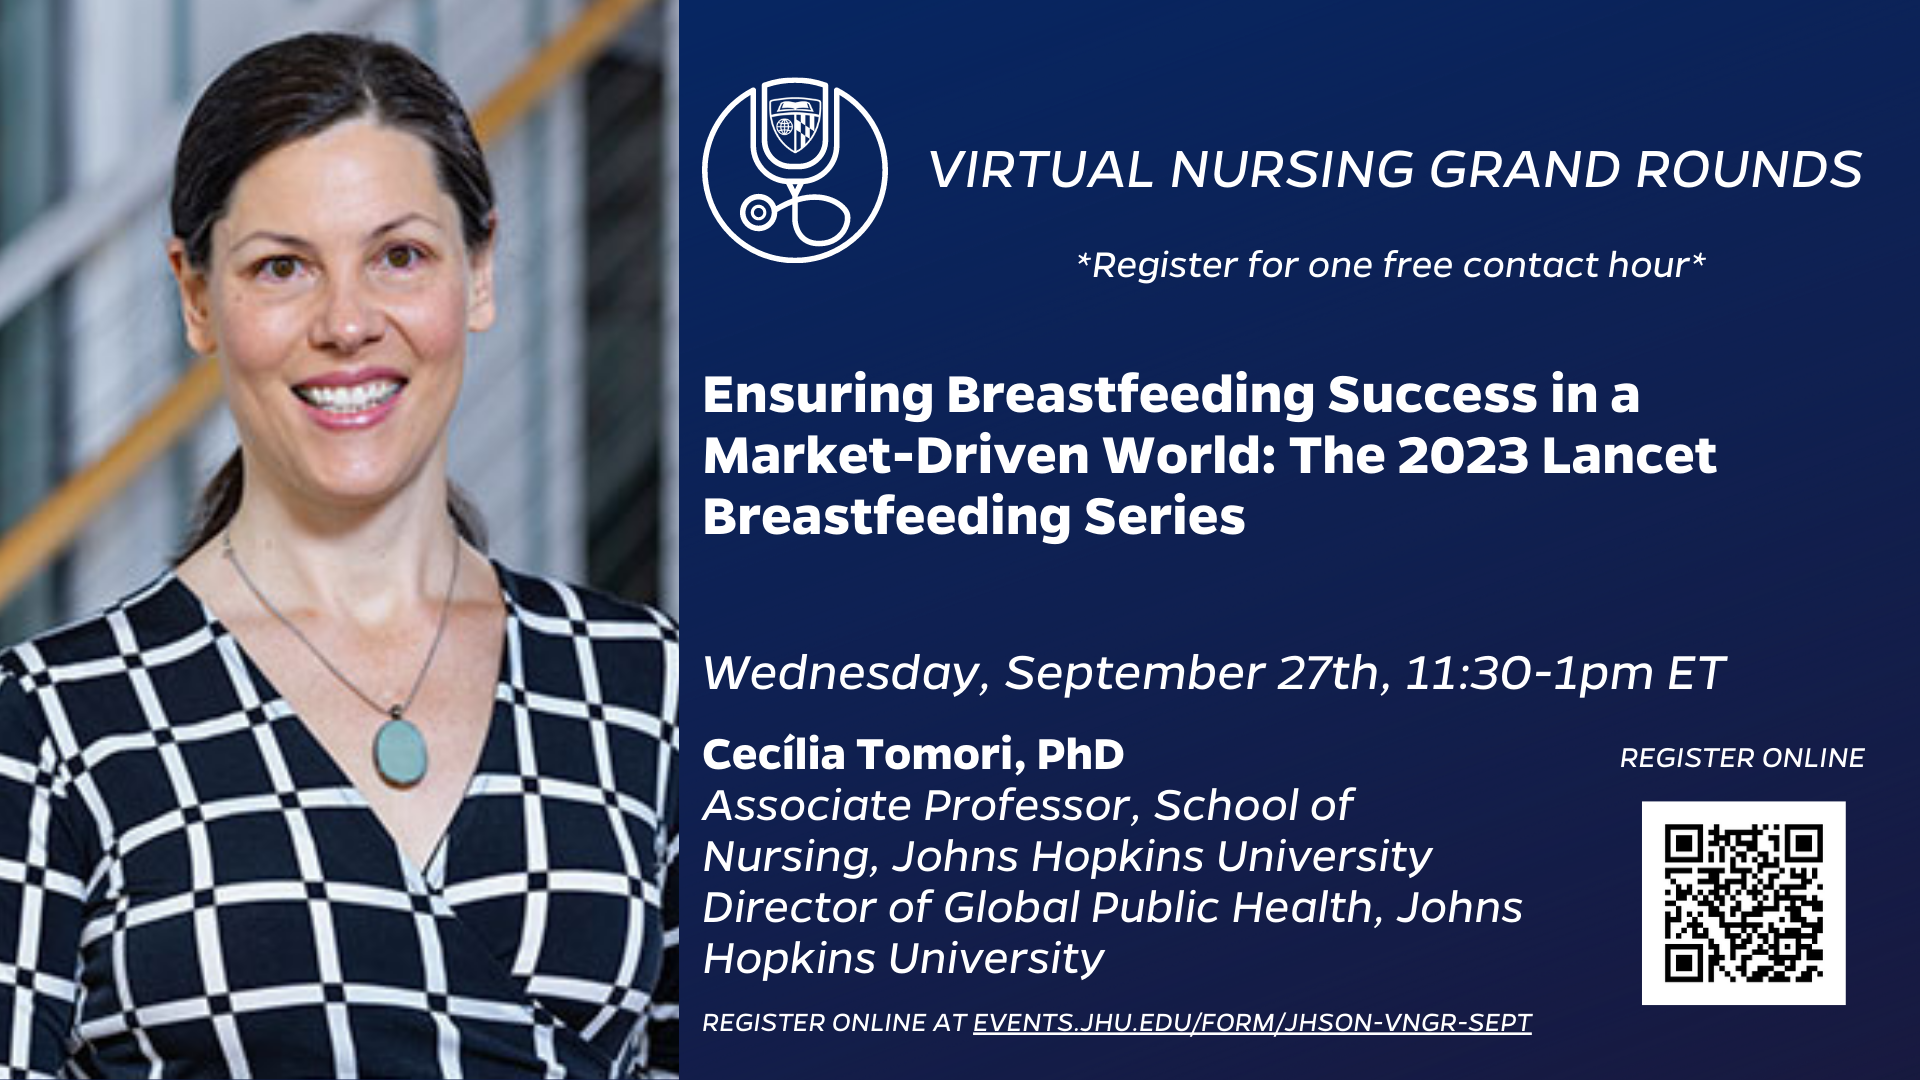 JHSON Virtual Nursing Grand Rounds: Ensuring Breastfeeding Success in a Market-Driven World: The 2023 Lancet Breastfeeding Series